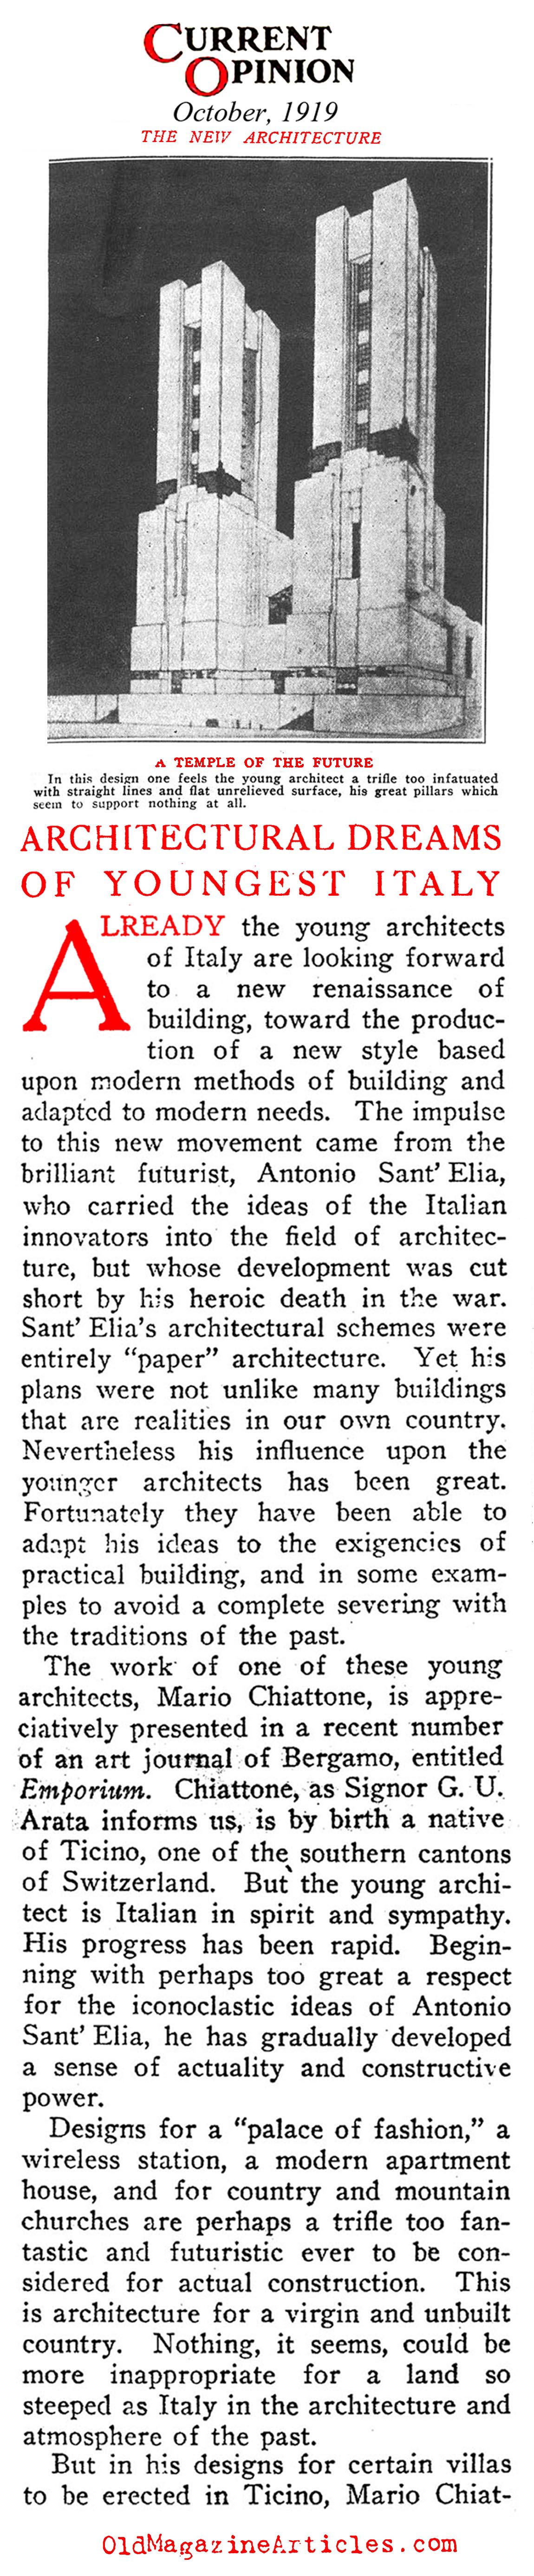 Designs of the Italian Futurists  (Current Opinion Magazine, 1919)